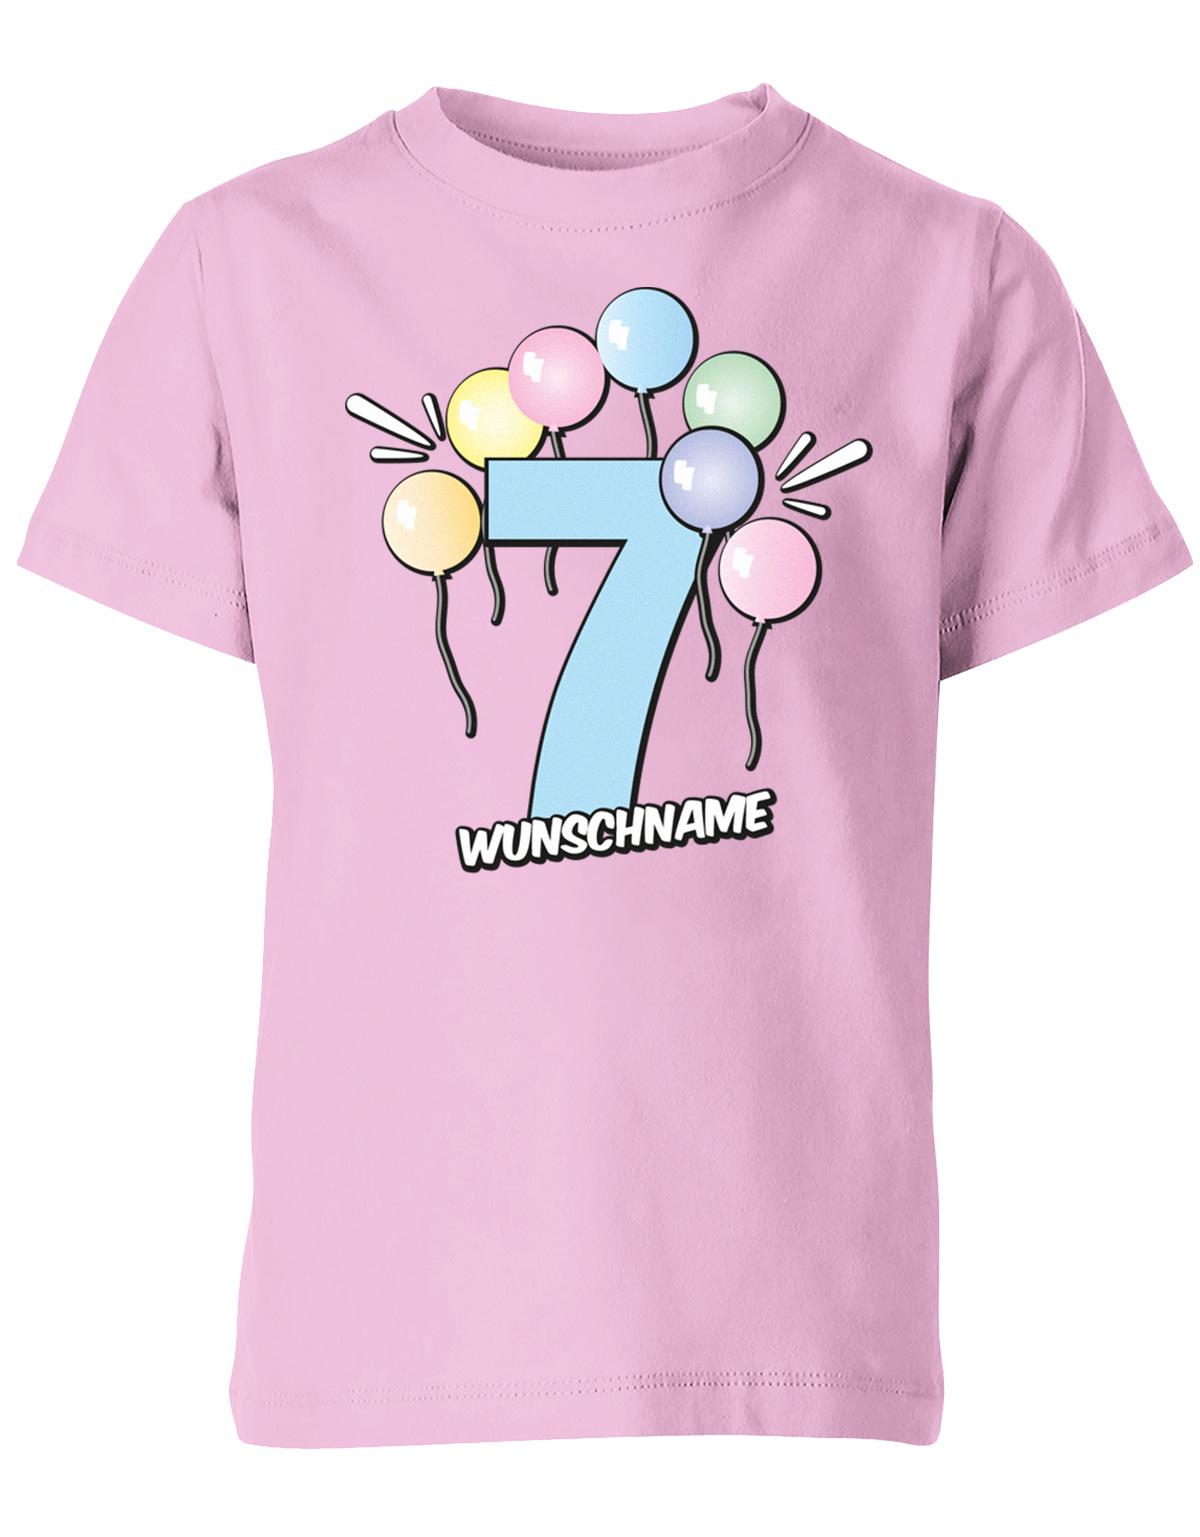 Luftballons-pastell-7-geburtstag-wunschname-kinder-shirt-rosa